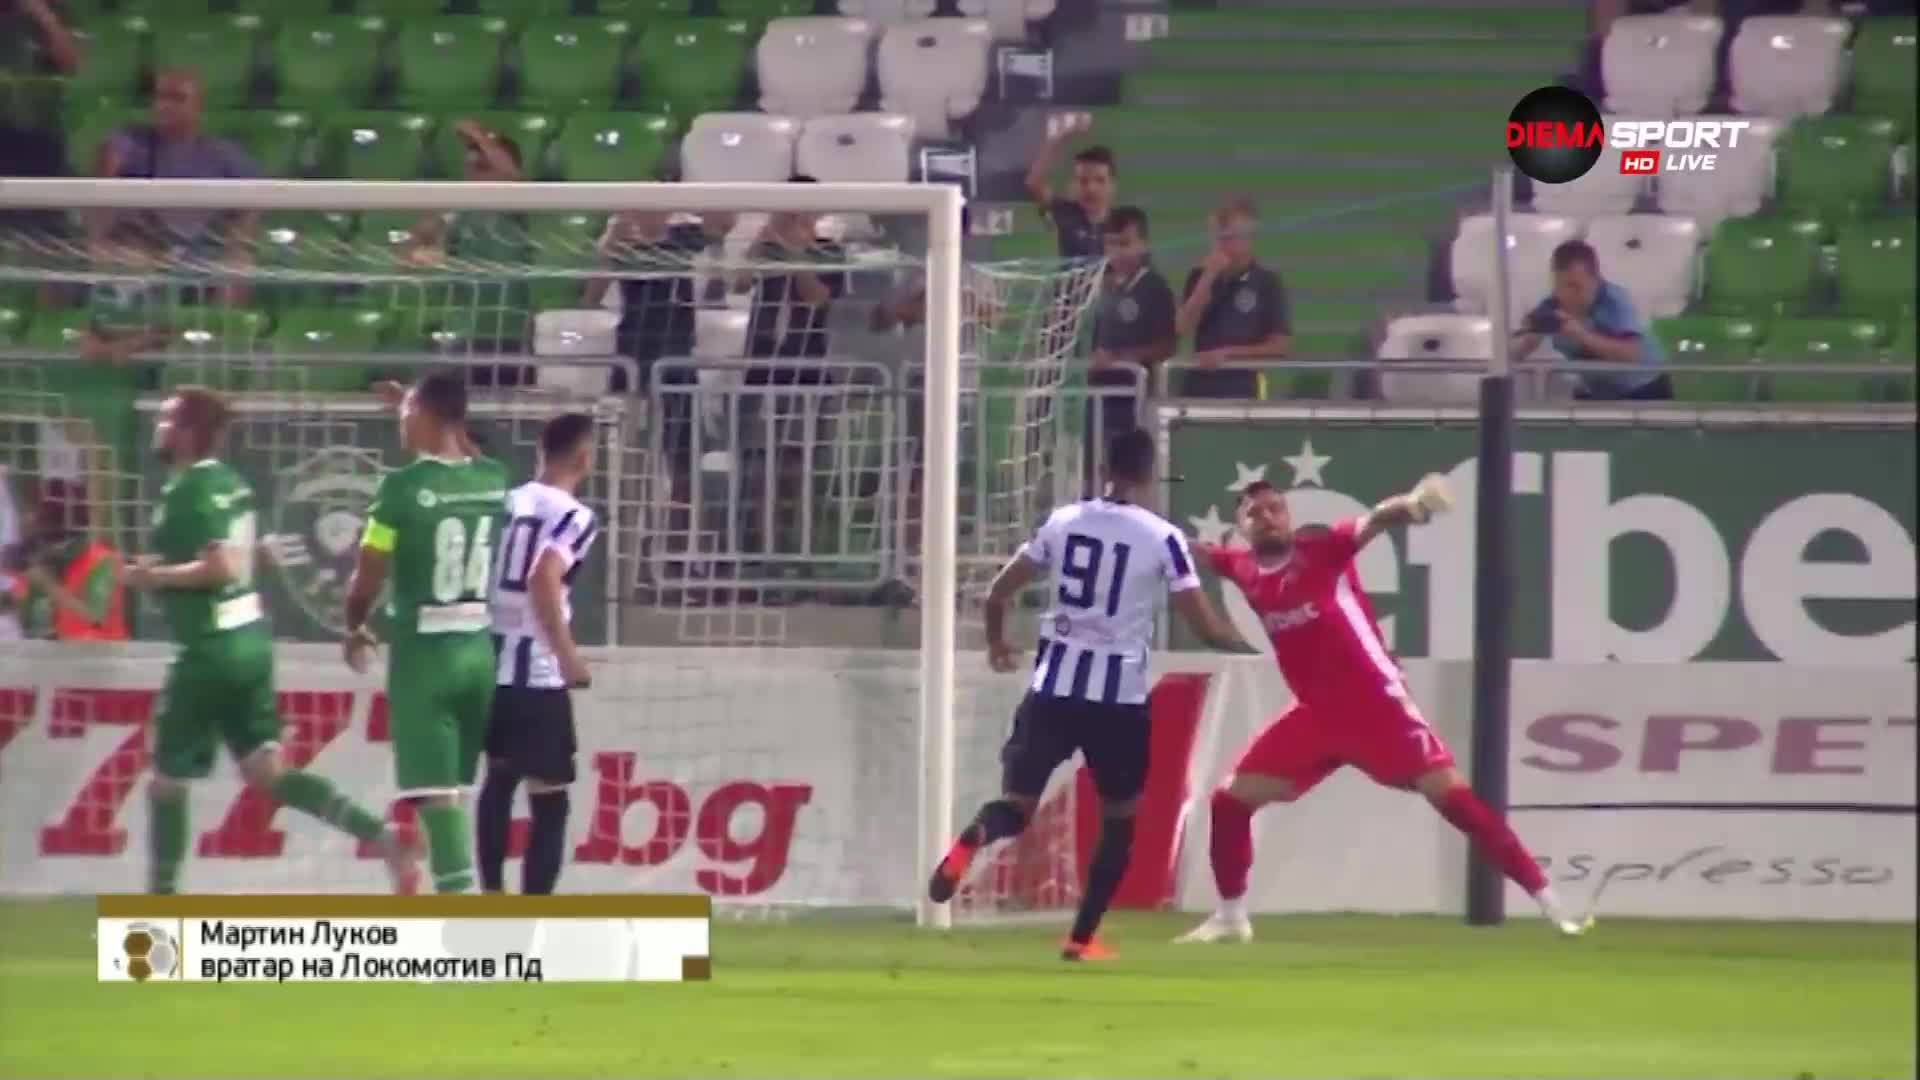 Спасяване на Мартин Луков от Локомотив Пловдив срещу Лудогорец